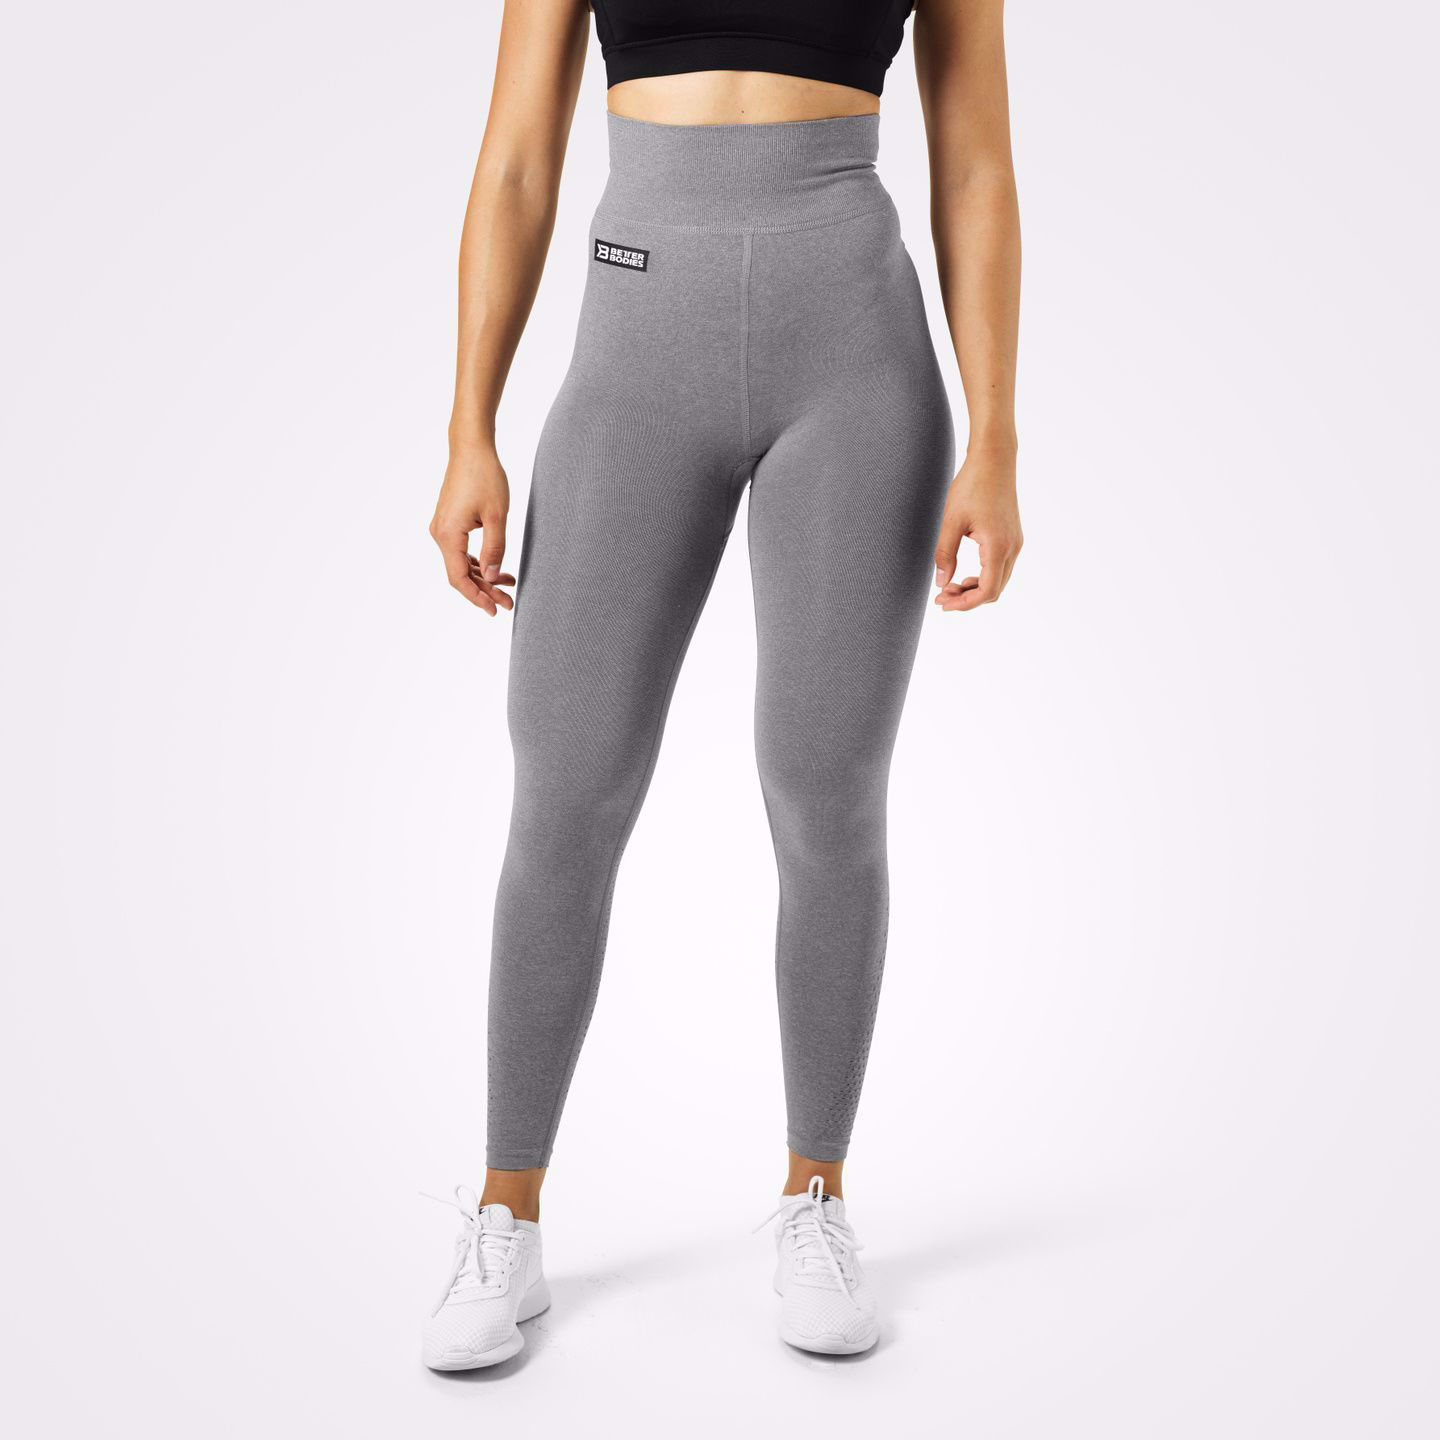 https://www.mgactivewear.com/images/thumbs/0000742_better-bodies-bowery-grey-melange-high-waist-seamless-legging-for-gym.jpeg